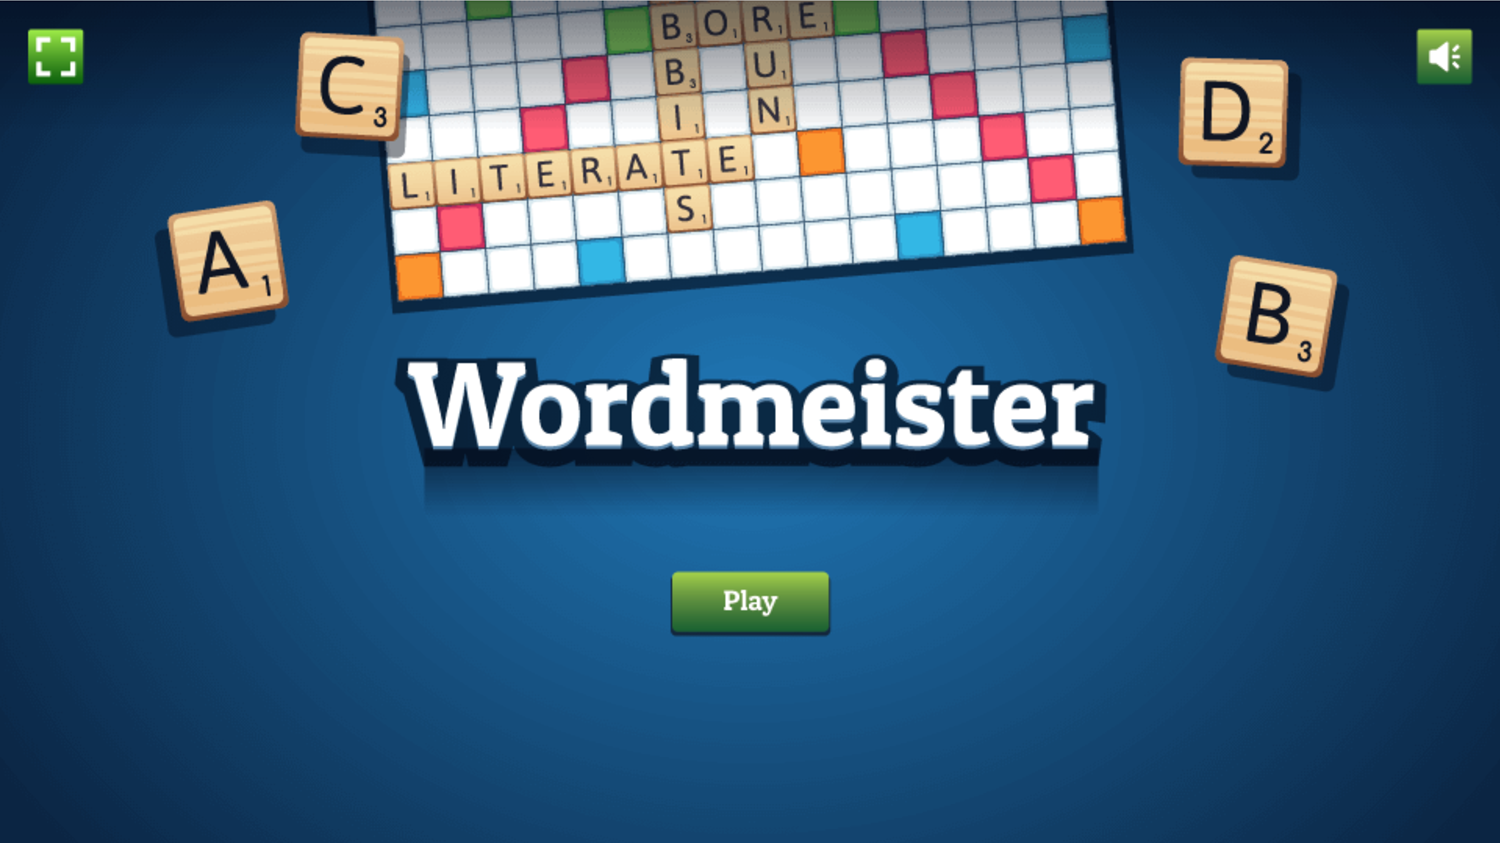 Wordmeister Game Welcome Screen Screenshot.